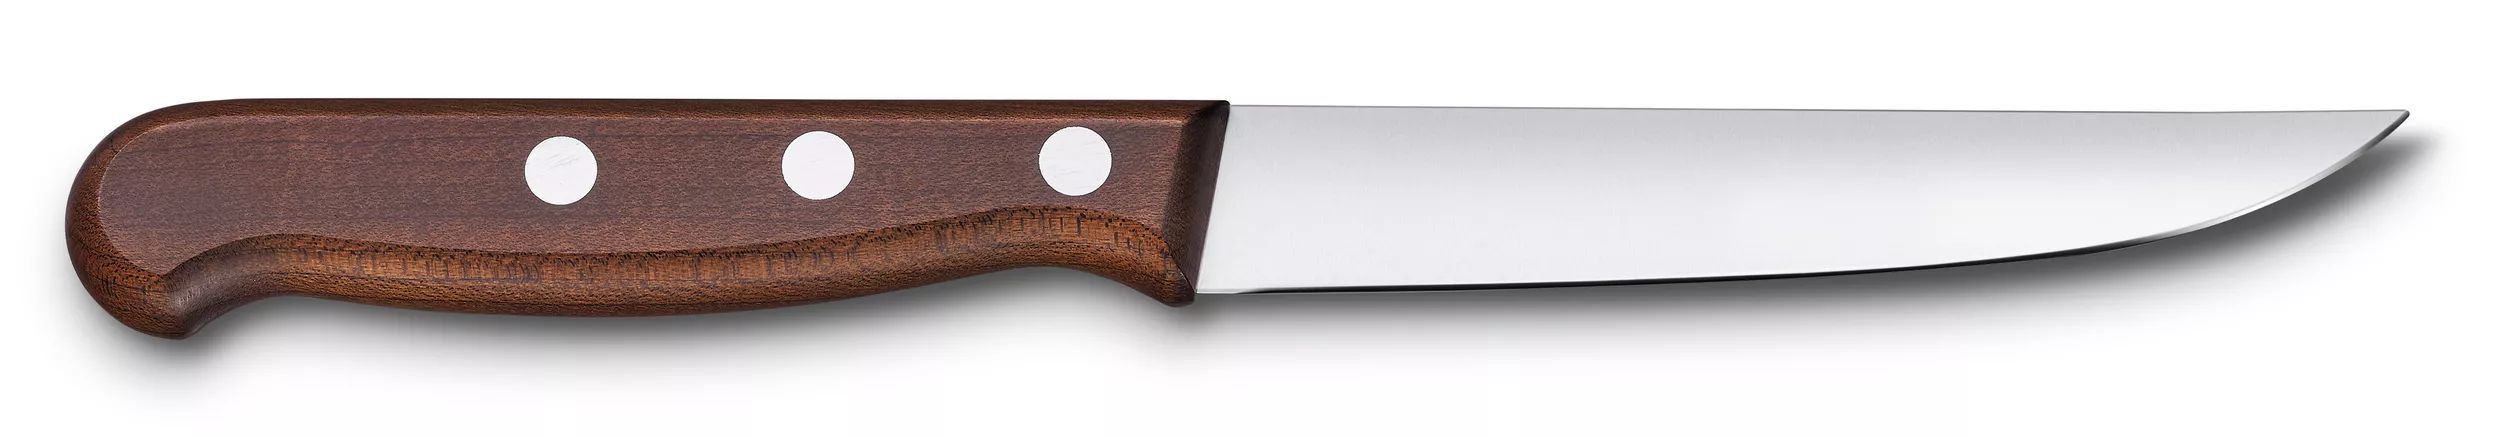 Set de cuchillos para bistec Wood, 2 piezas